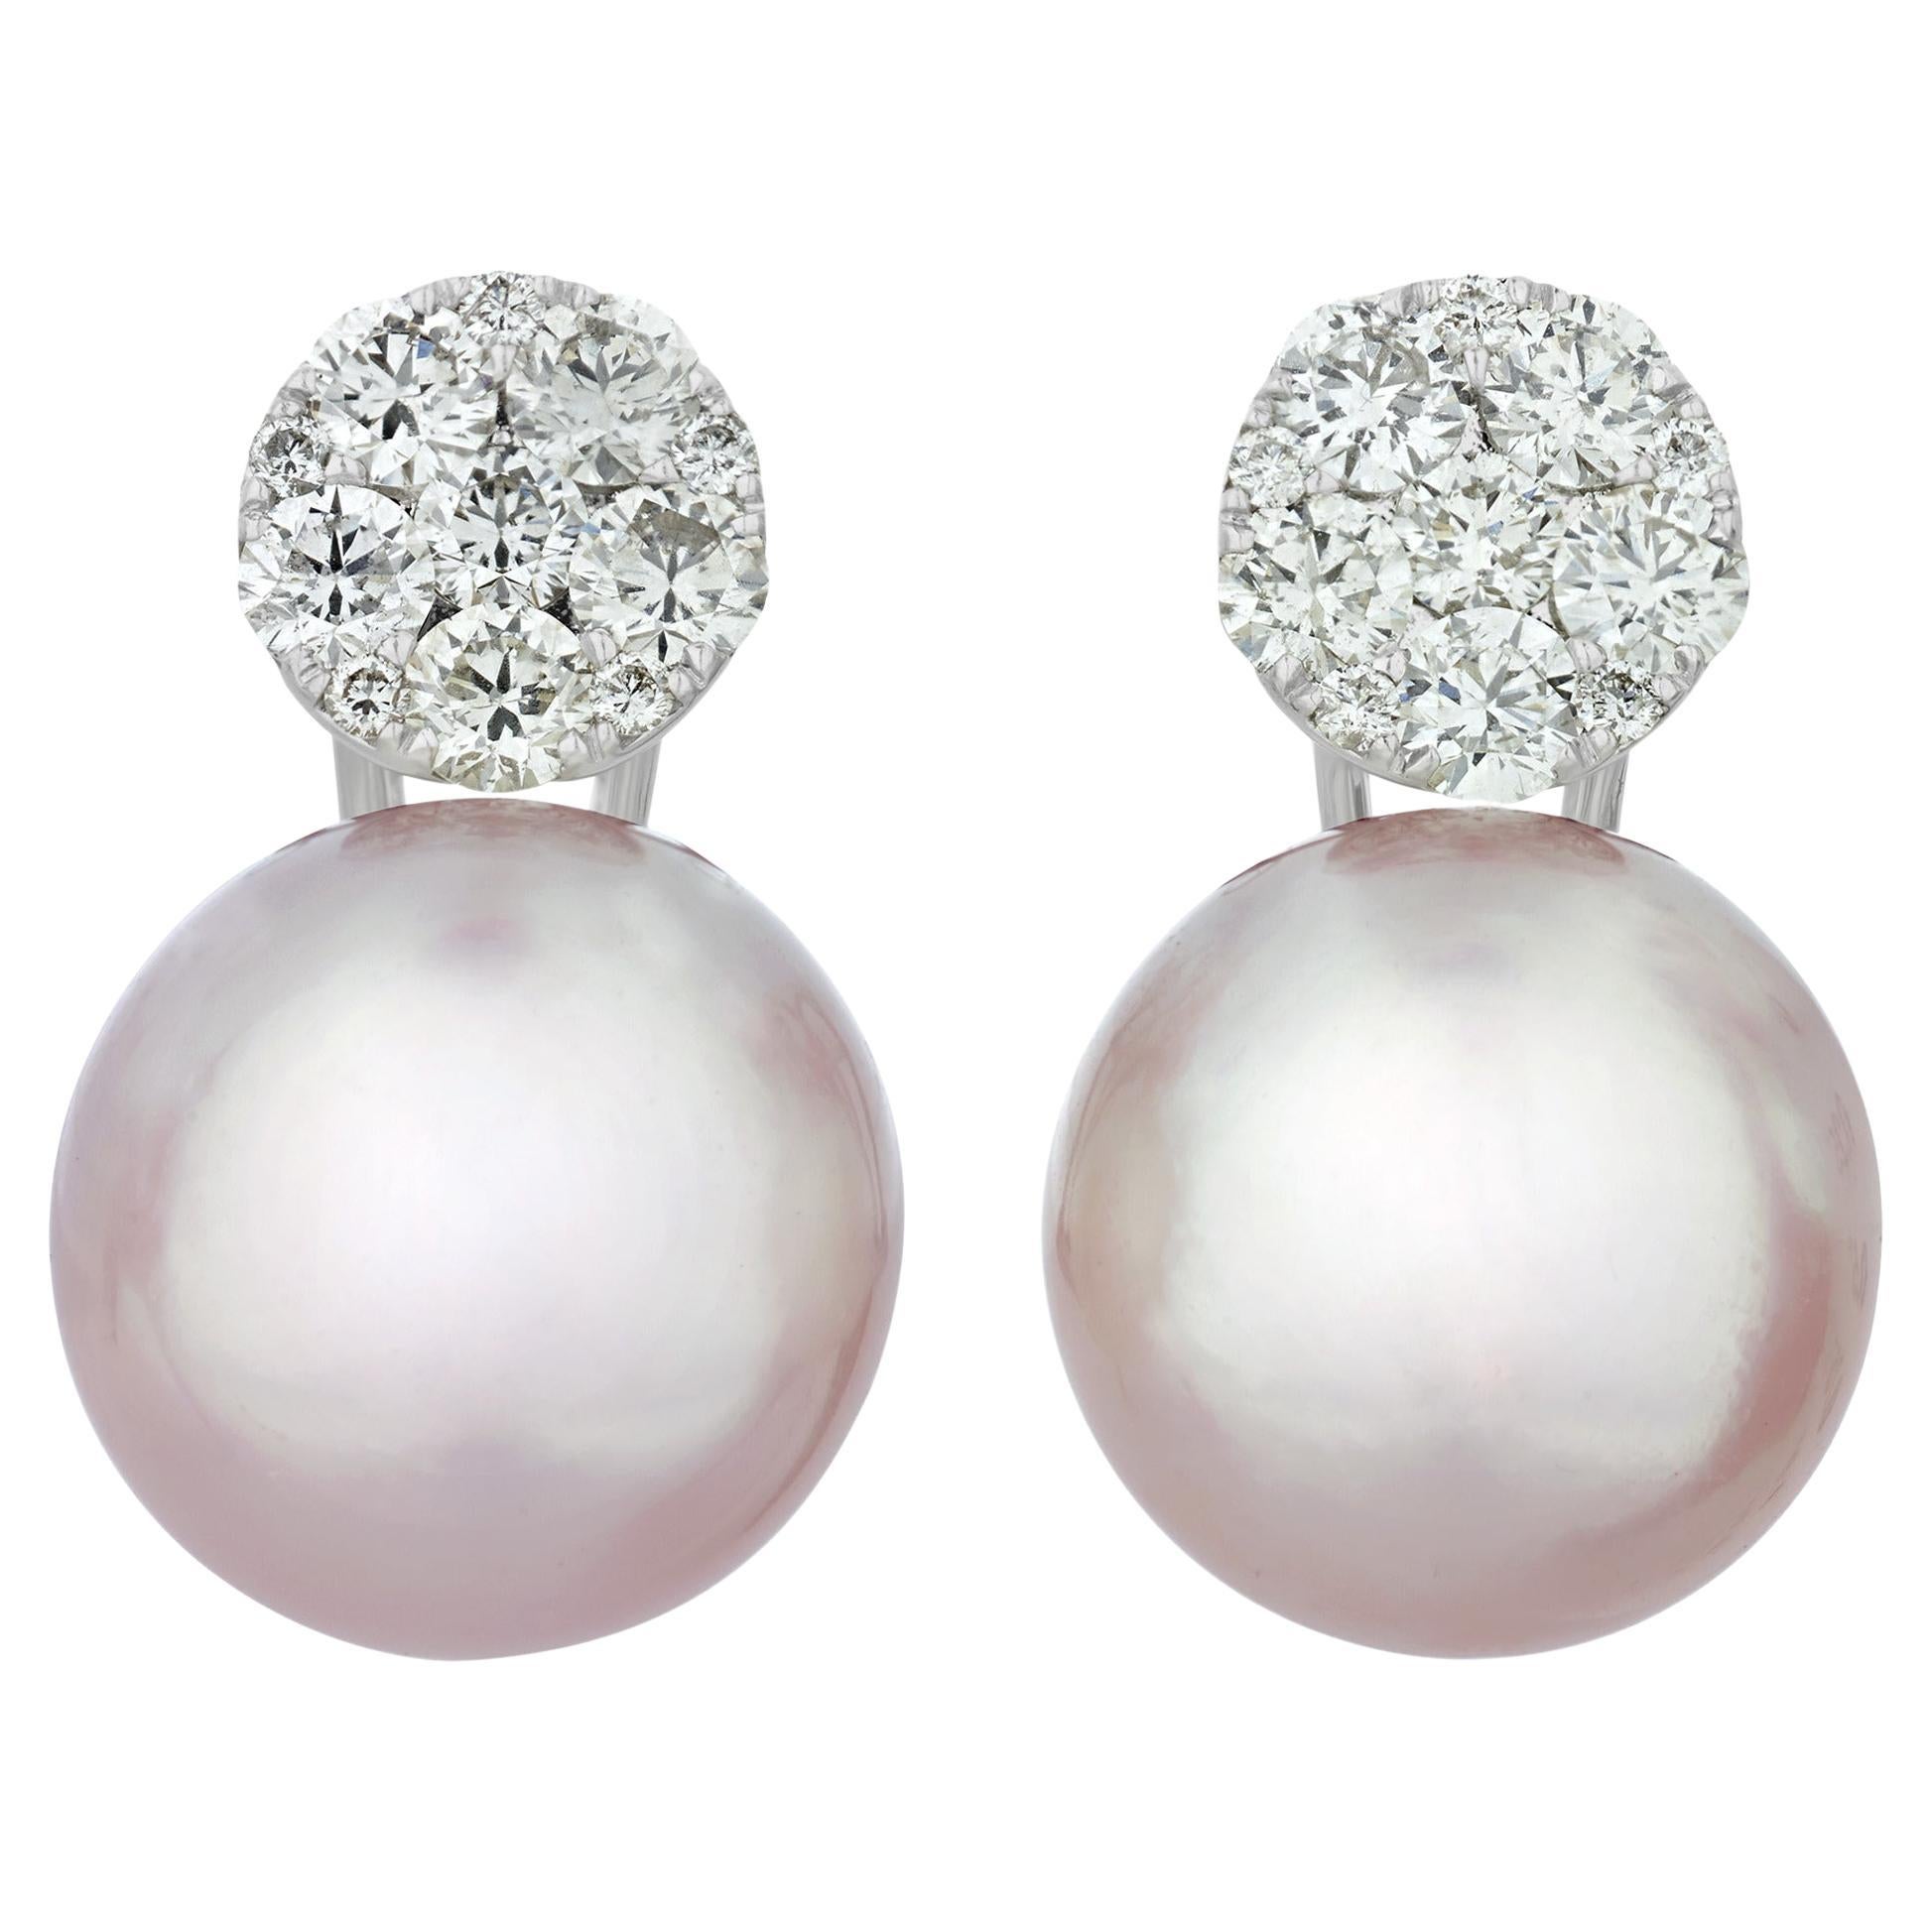 South Sea Pearl And Diamond Earrings, 1.80 Carats